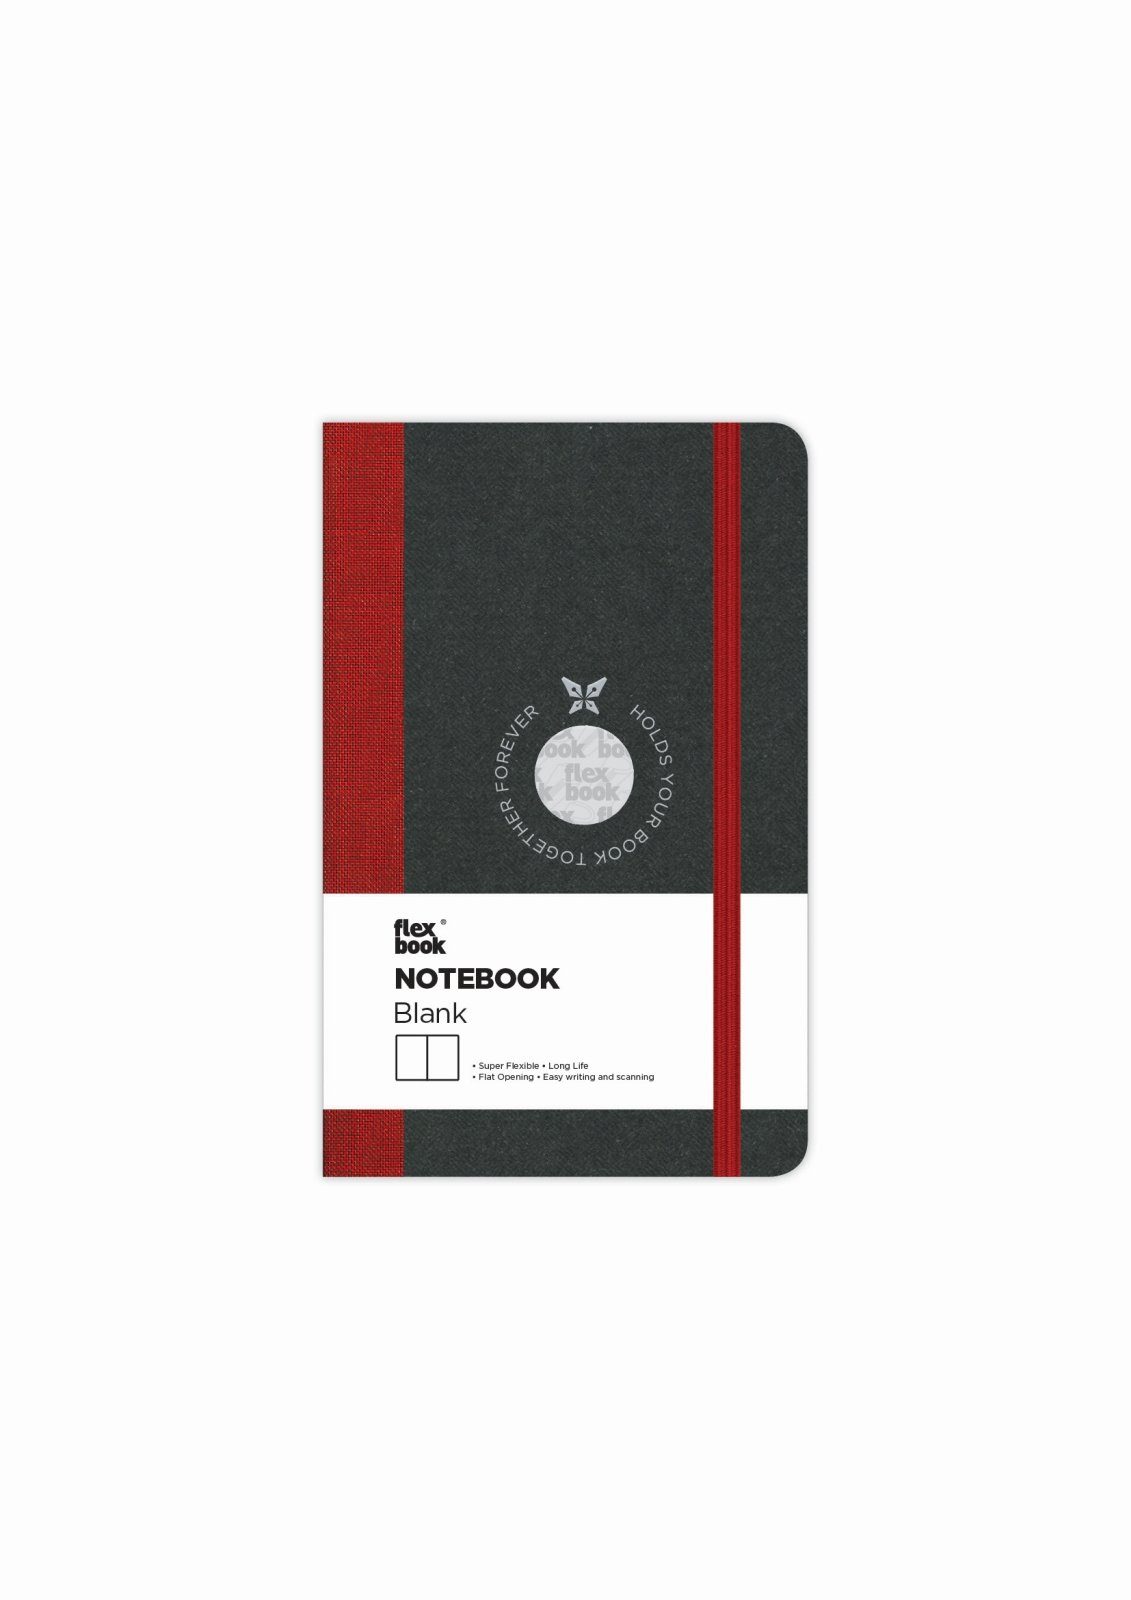 Flexbook Notizbuch Flexbook Globel Notizbuch blanko/linierte Seiten Elastikband verschied 9 * 14 cm / Blanko / Rot